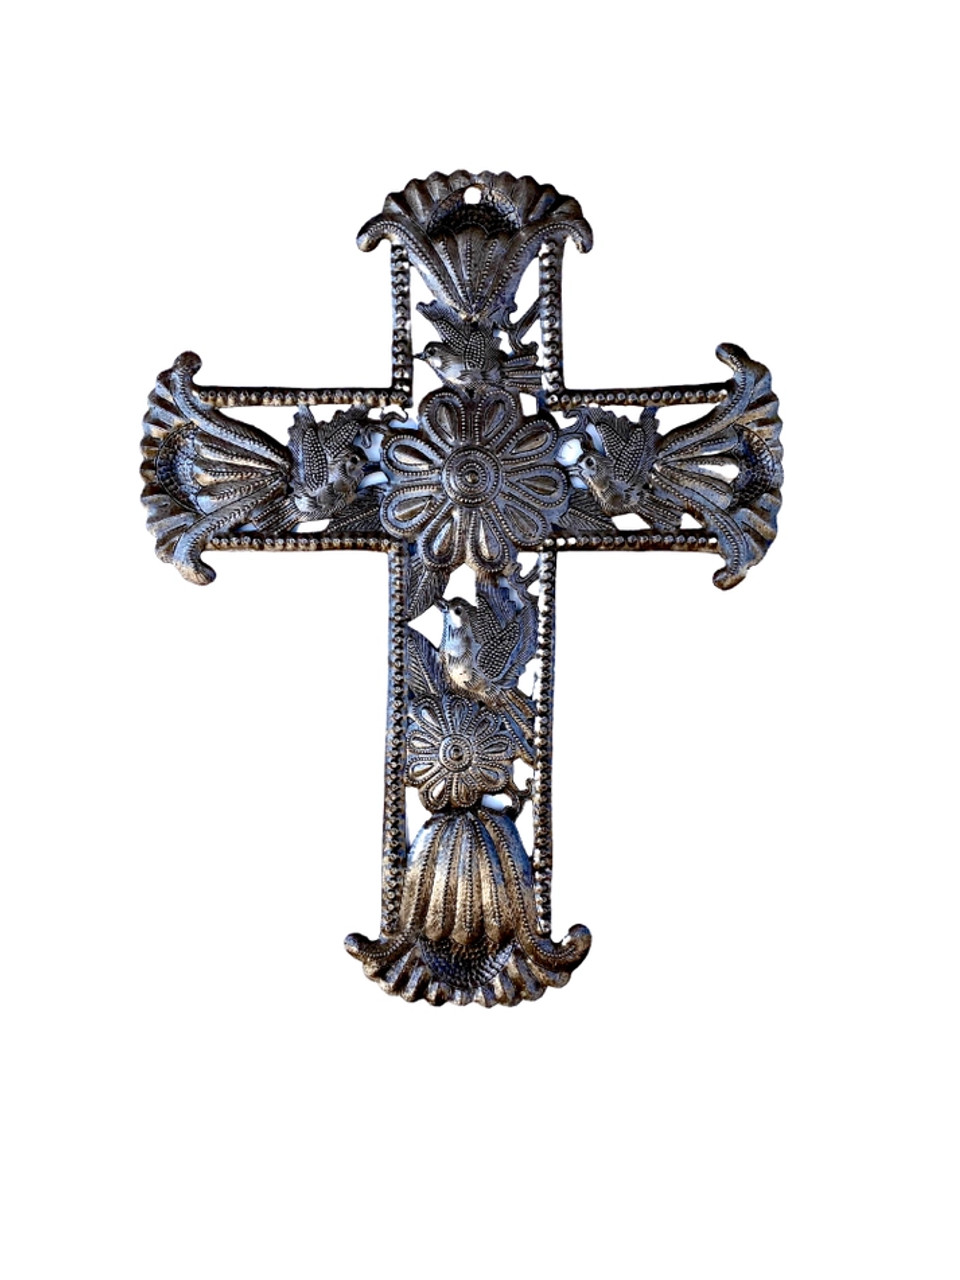 Metal Cross Home Decor, Folkart Religious Cross, Sacred Wall 8.5 x 11 Inches